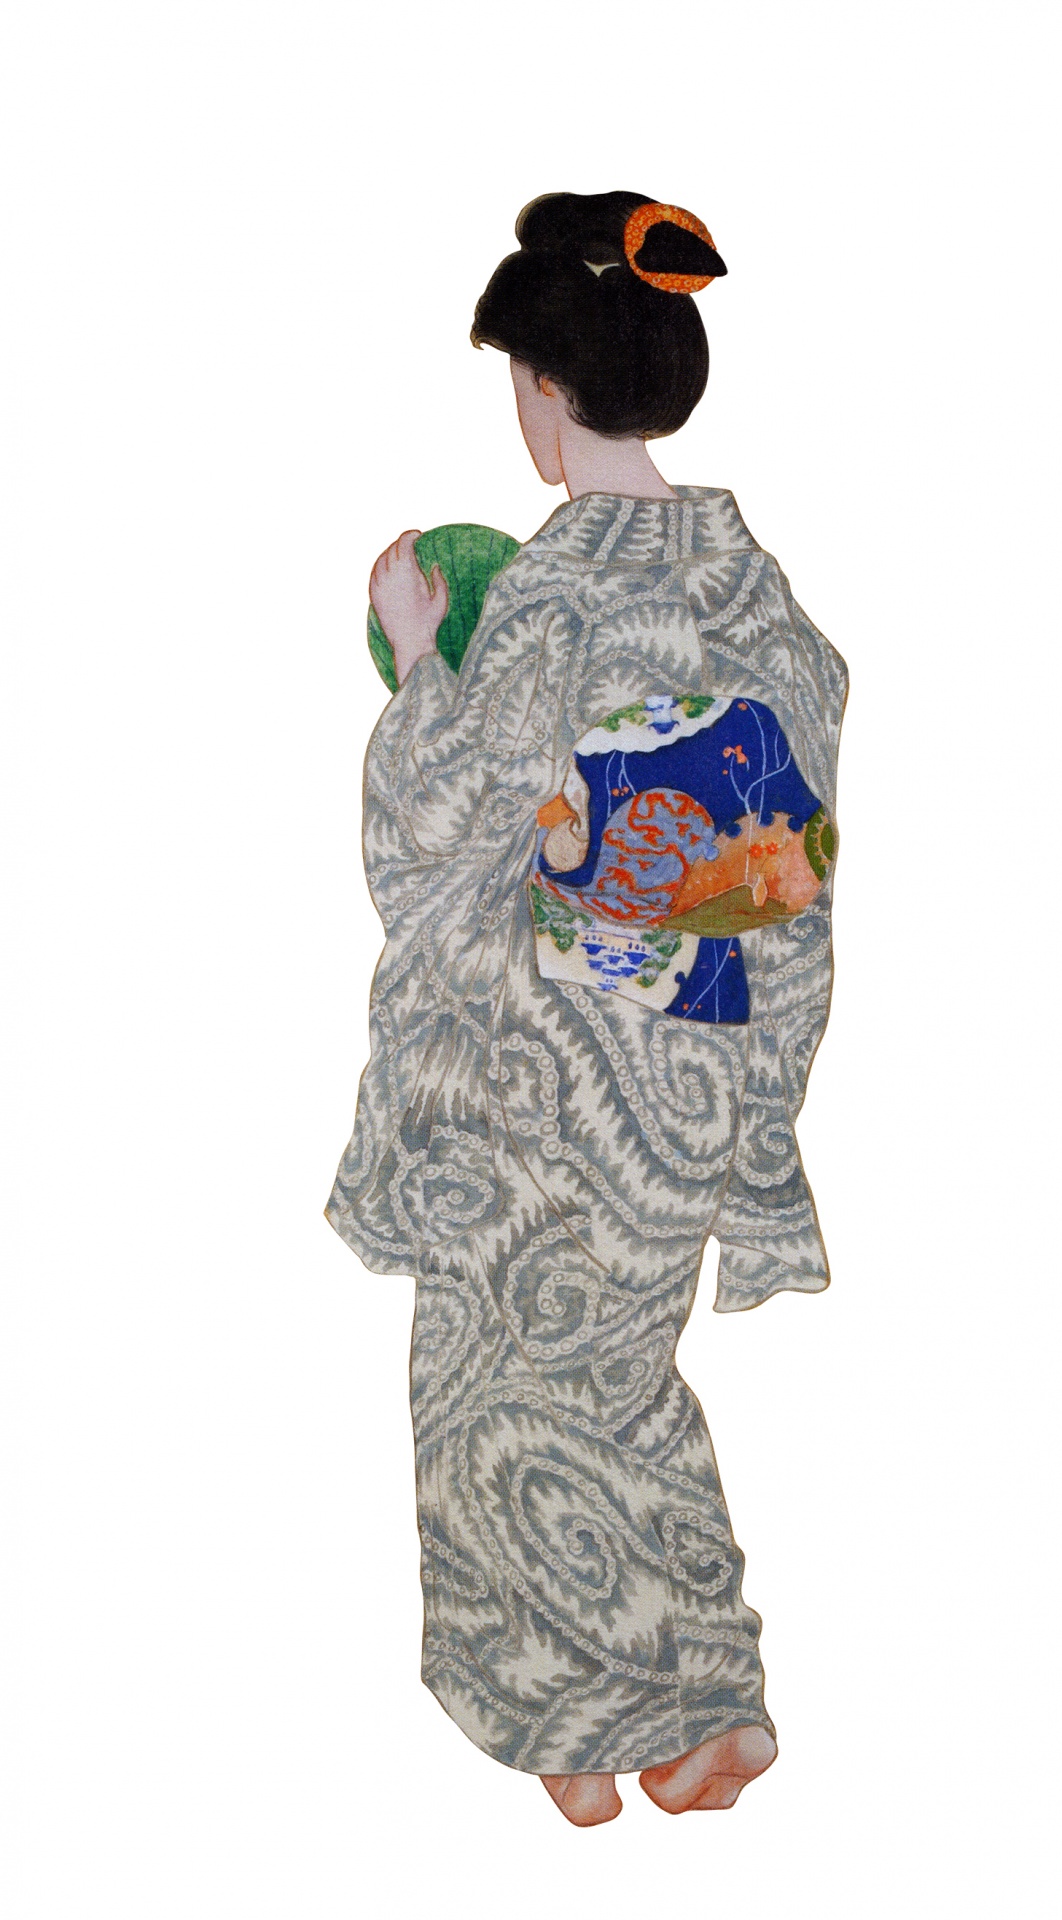 Japanese Woman Vintage Art